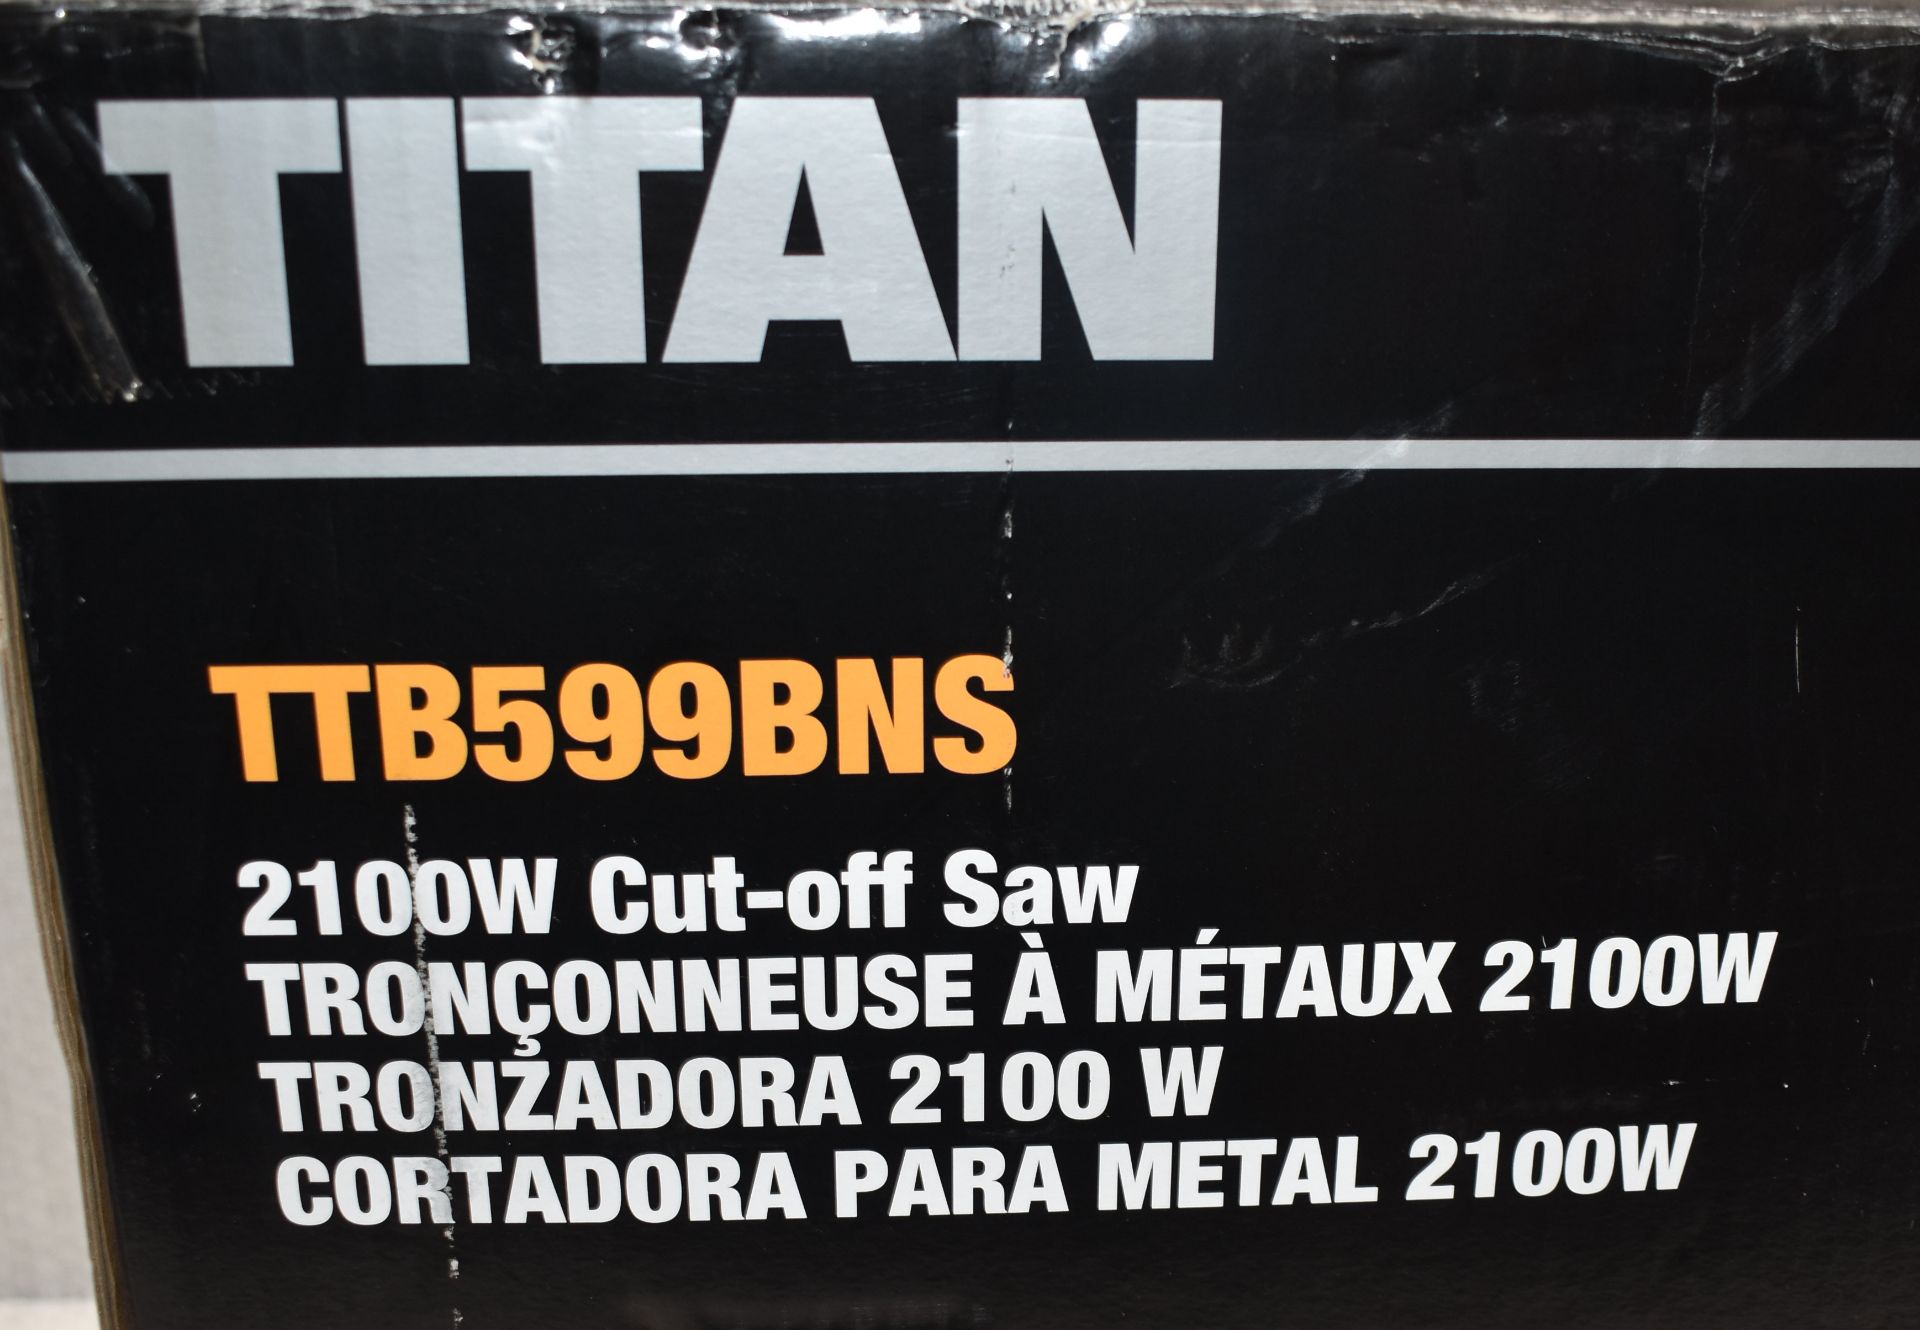 1 x TITAN 2100W 355Mm Cut-Off Saw / Chop Saw - Model: TTBS99BNS - Ref: K254 - CL905 - Location: Altr - Image 6 of 21